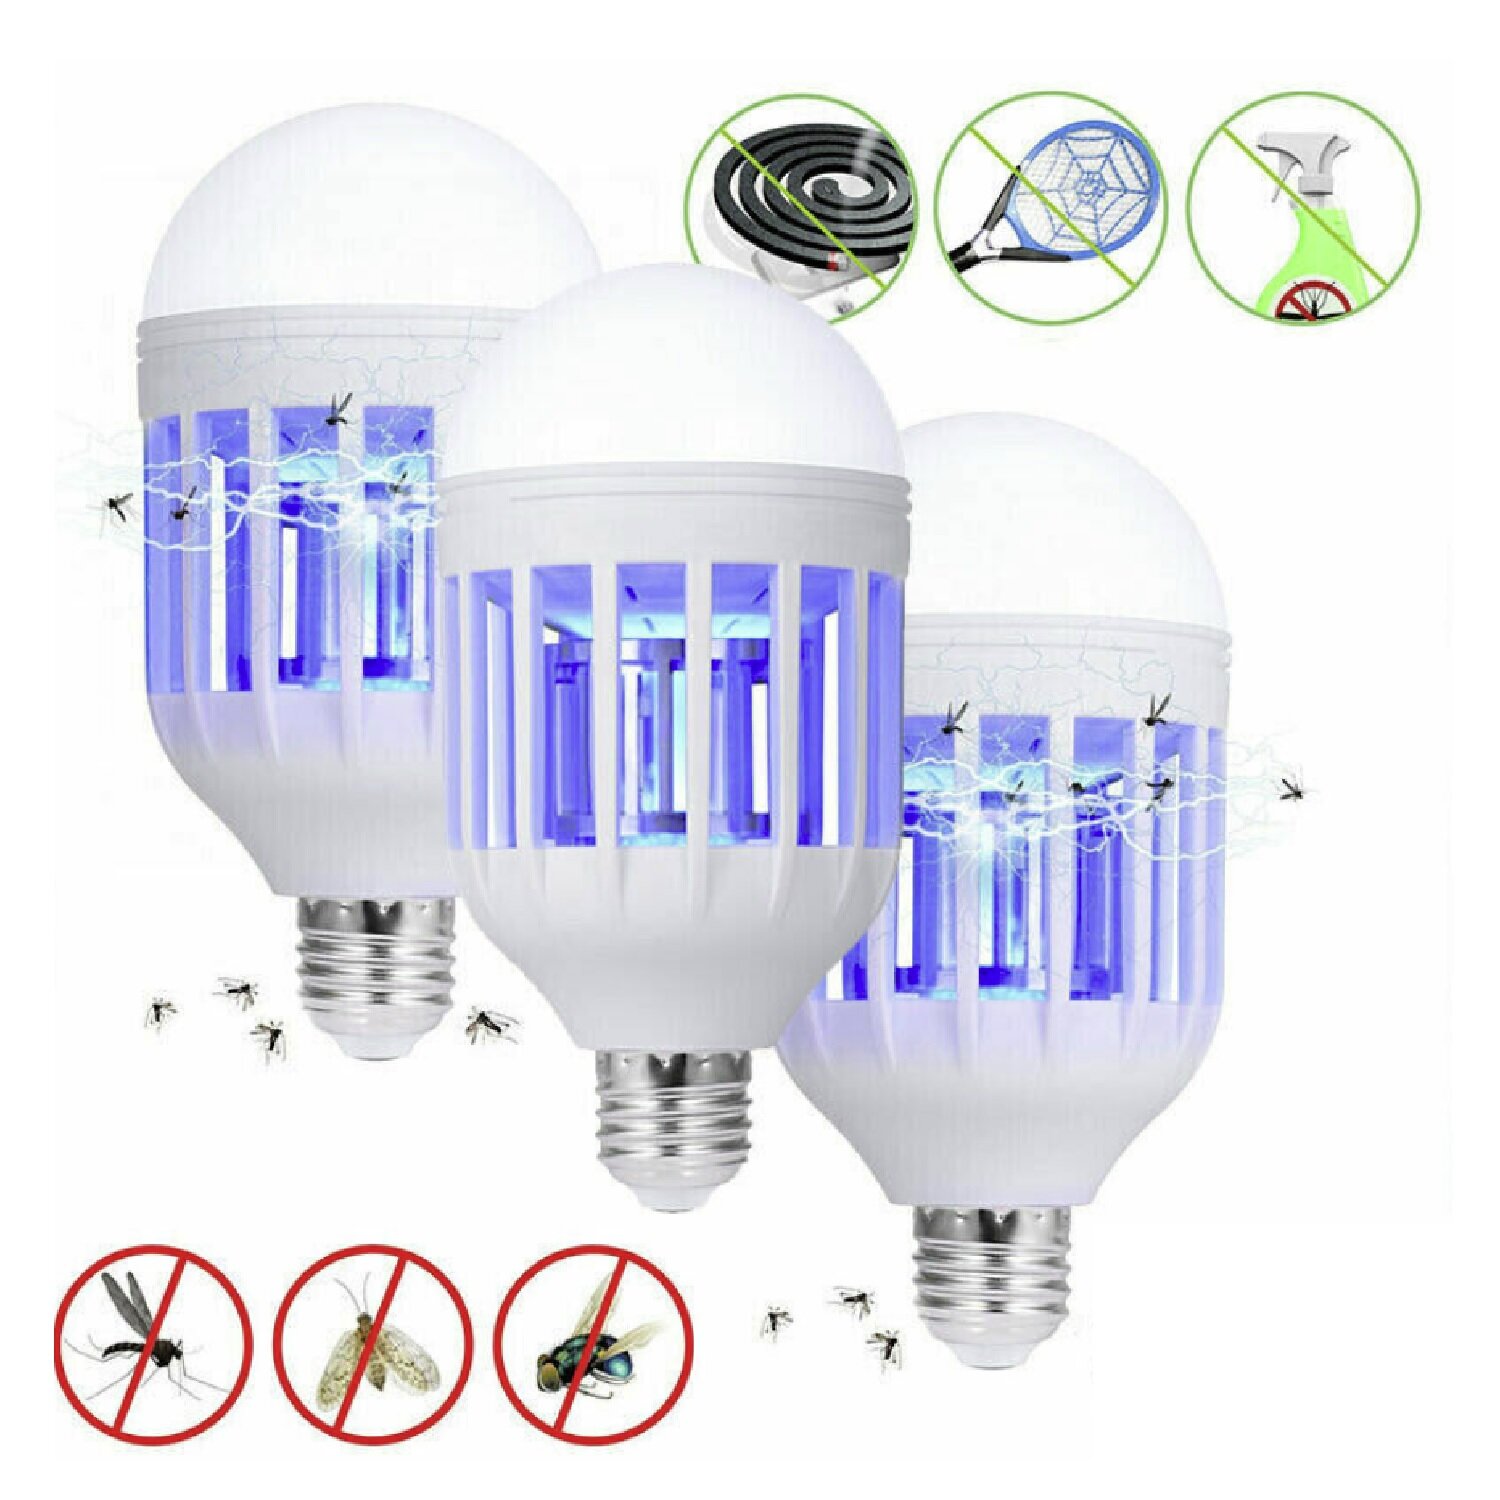 2 in 1 Light Zapper LED Light Bulb Bug Mosquito Fly Insect Killer Bulb Lamp Home 